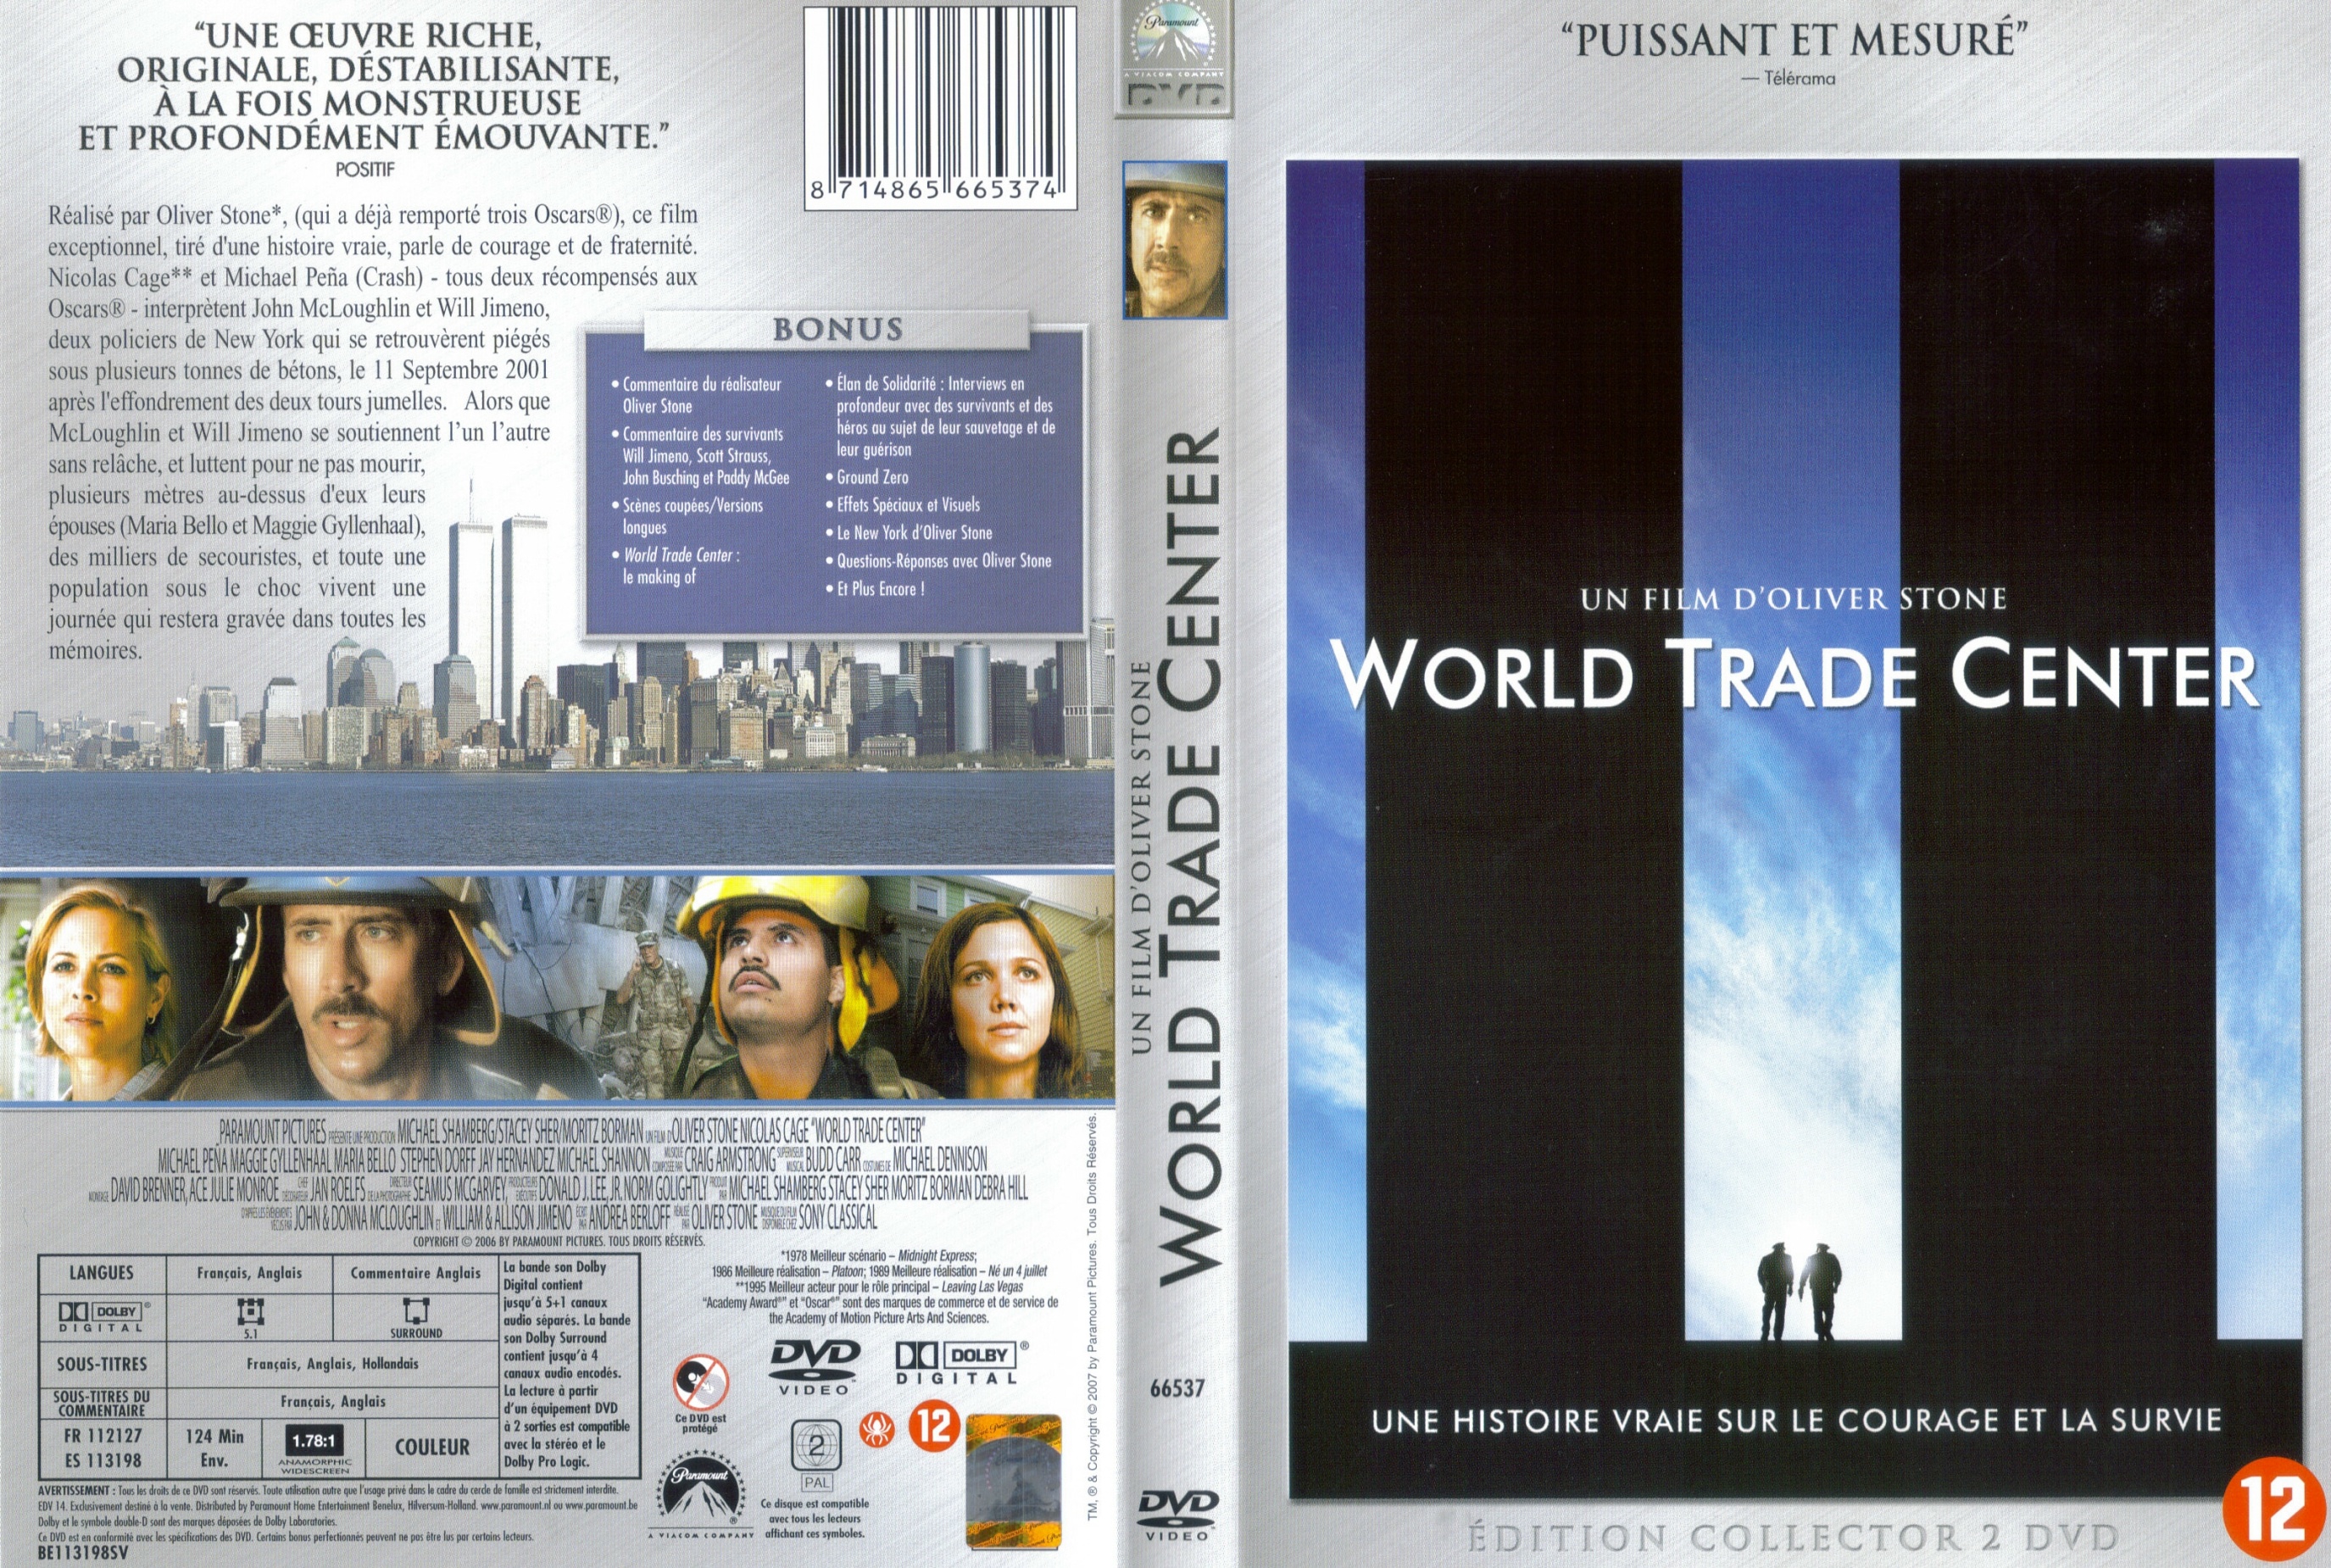 Jaquette DVD World trade center v2